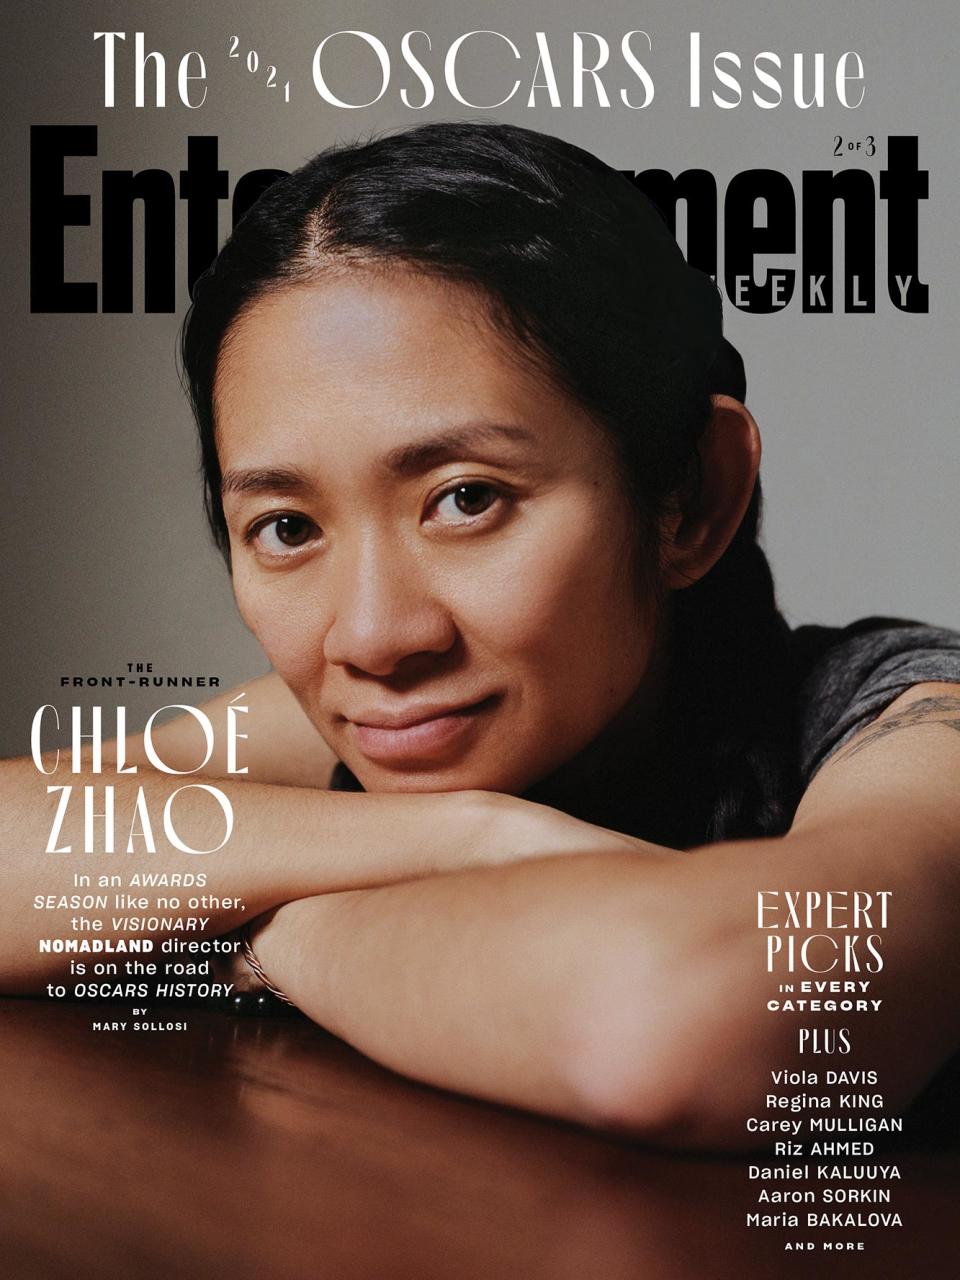 Chloé Zhao's EW Oscars issue cover